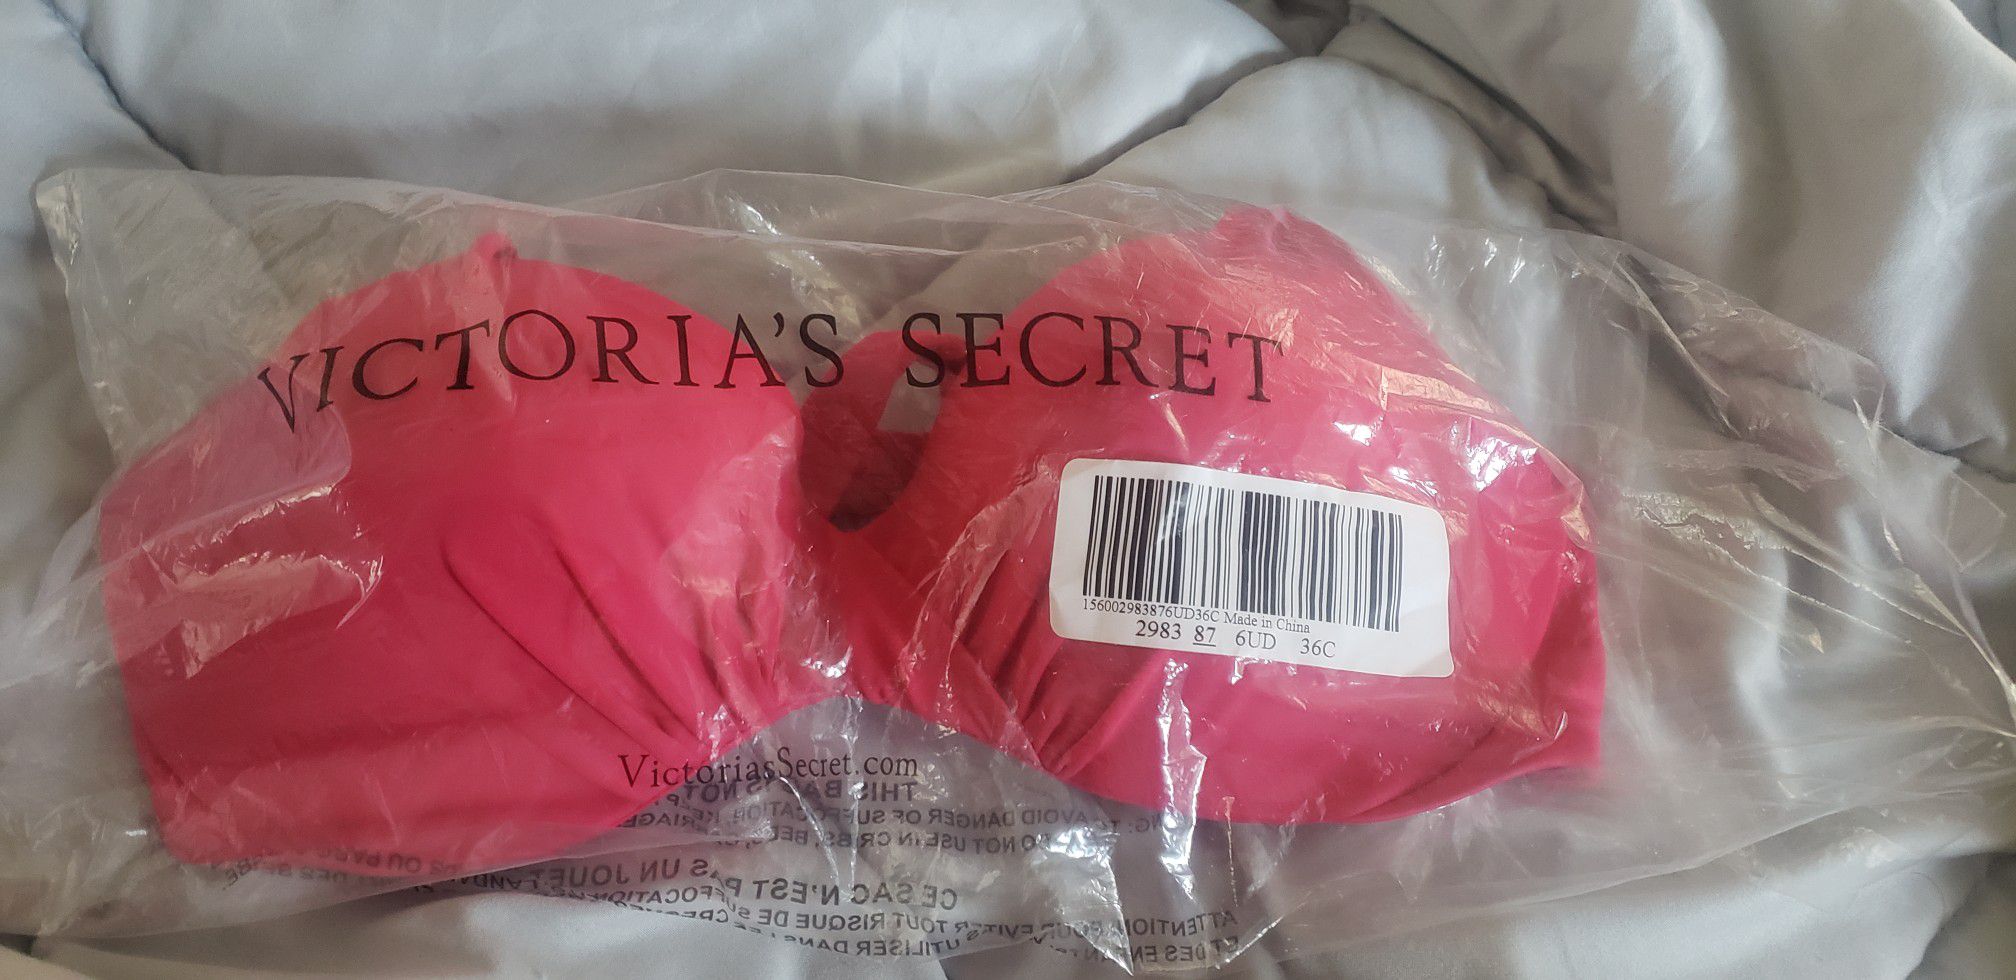 Victoria's secret swimsuit top